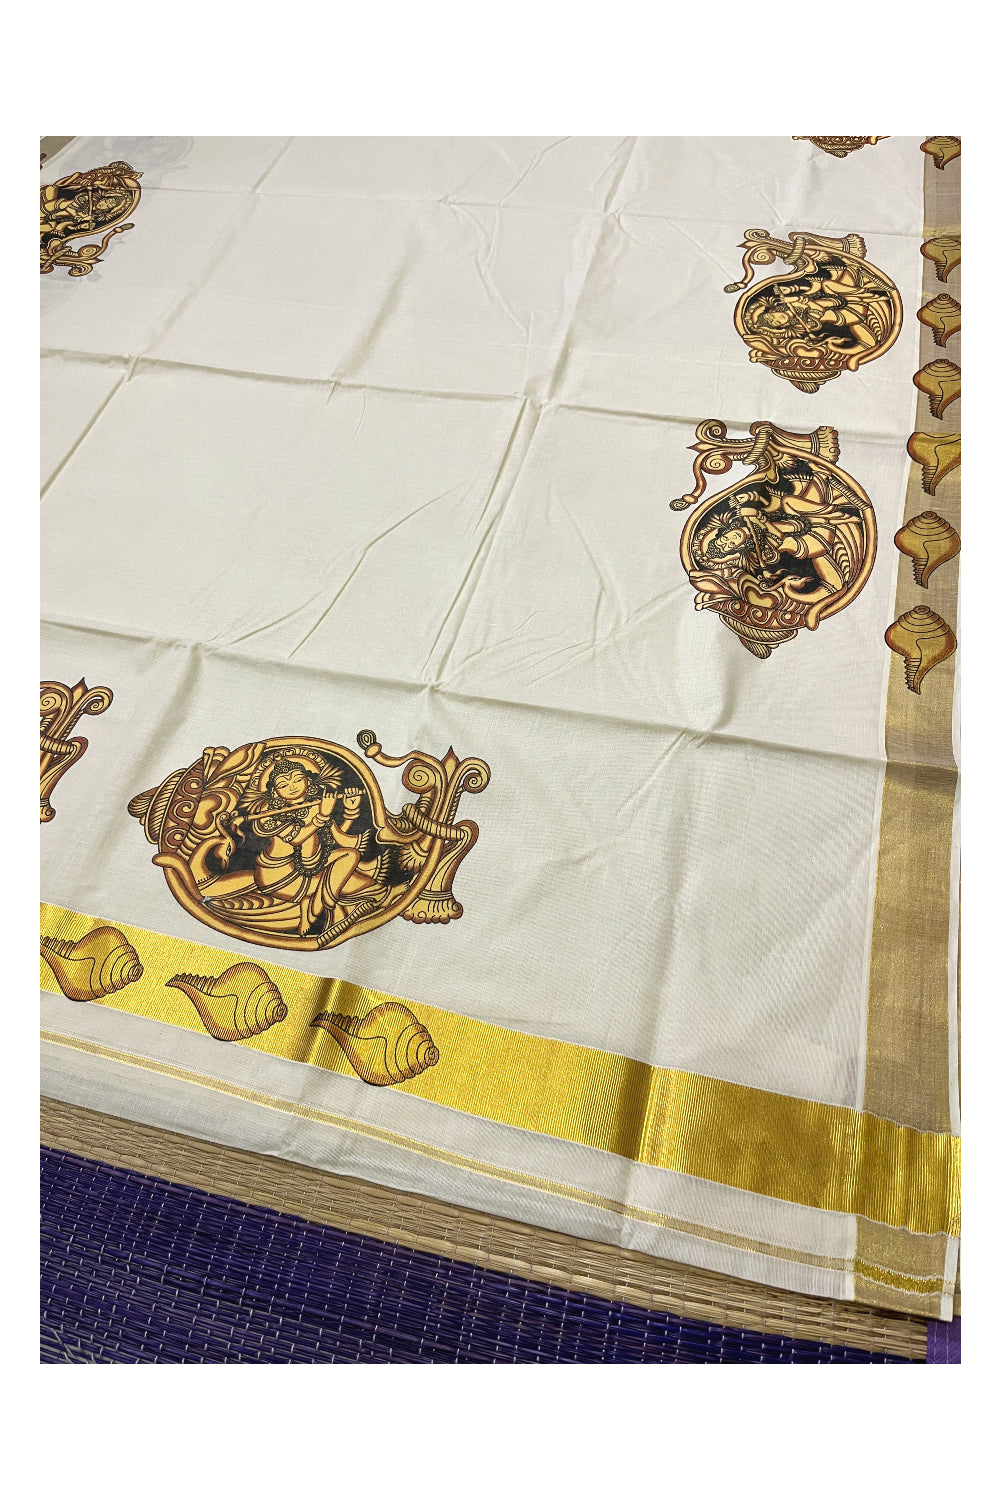 Kerala Pure Cotton Saree with Krishna and Shell Mural Prints and Printed Kasavu Border